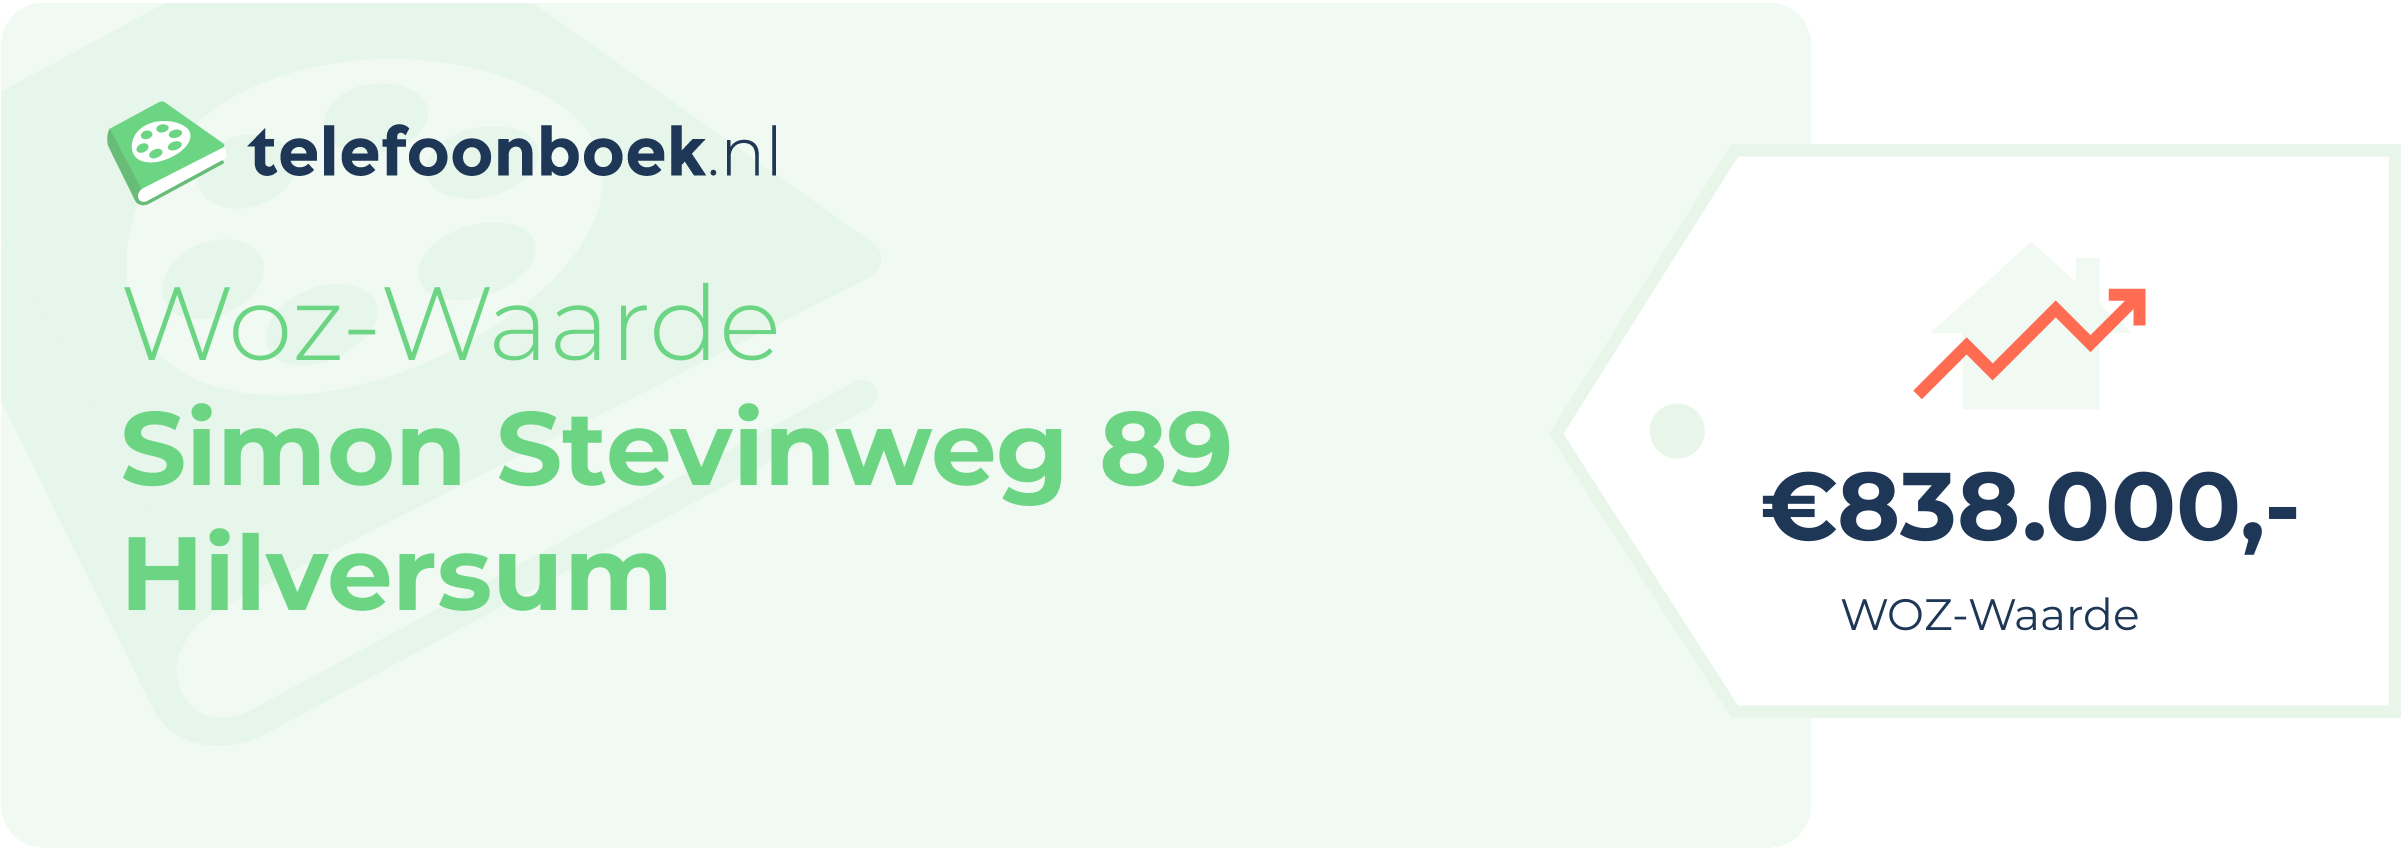 WOZ-waarde Simon Stevinweg 89 Hilversum